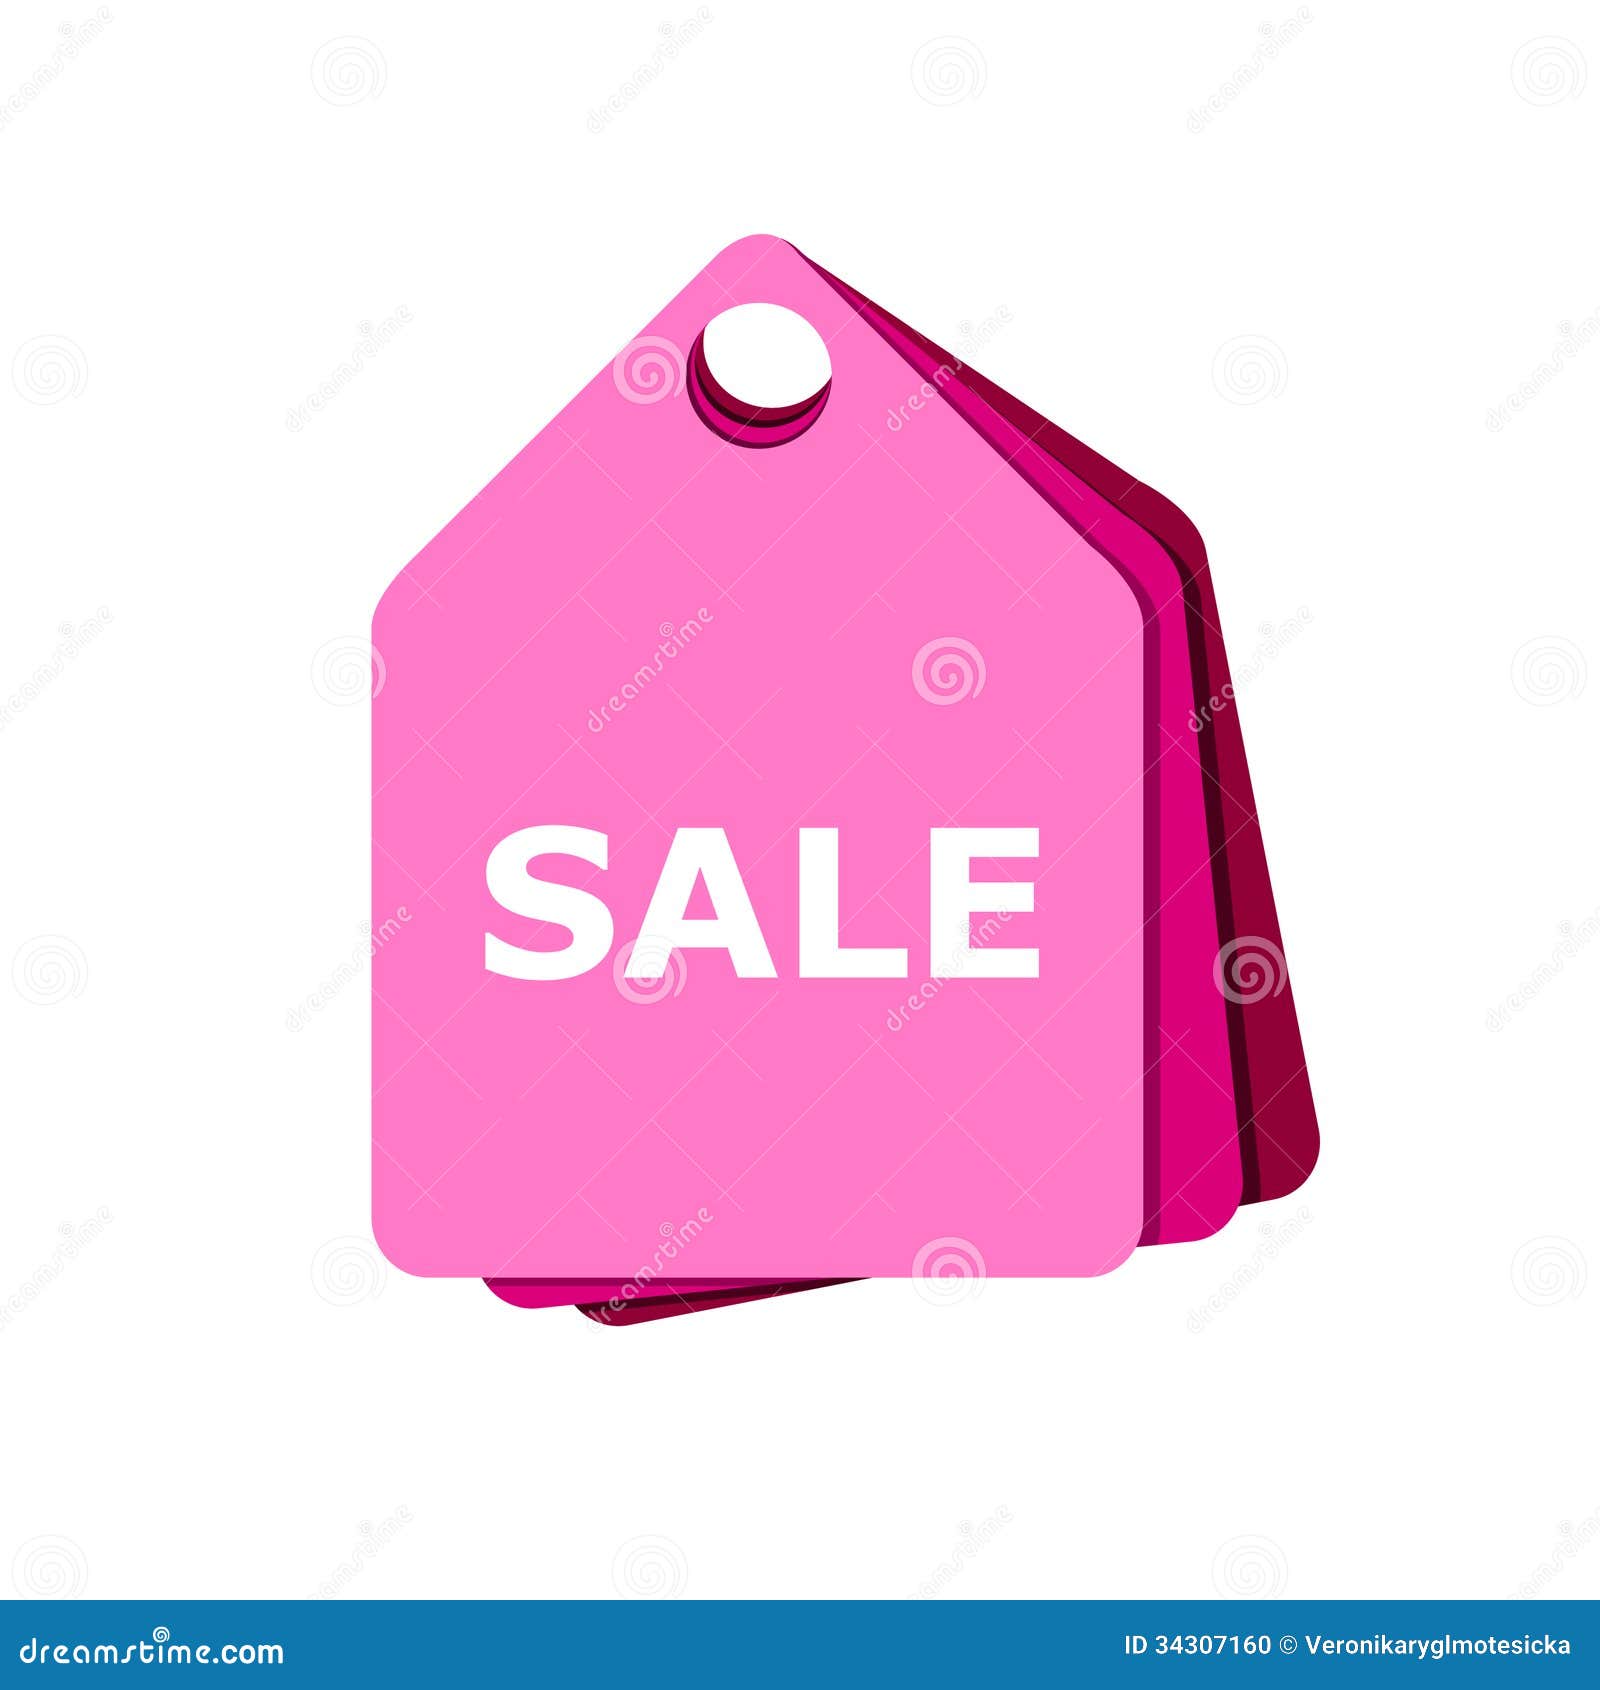 Розовый sale111121 цена. Sale розовый. Акция розовая. Розовая надпись sale. Sale значок розовый.